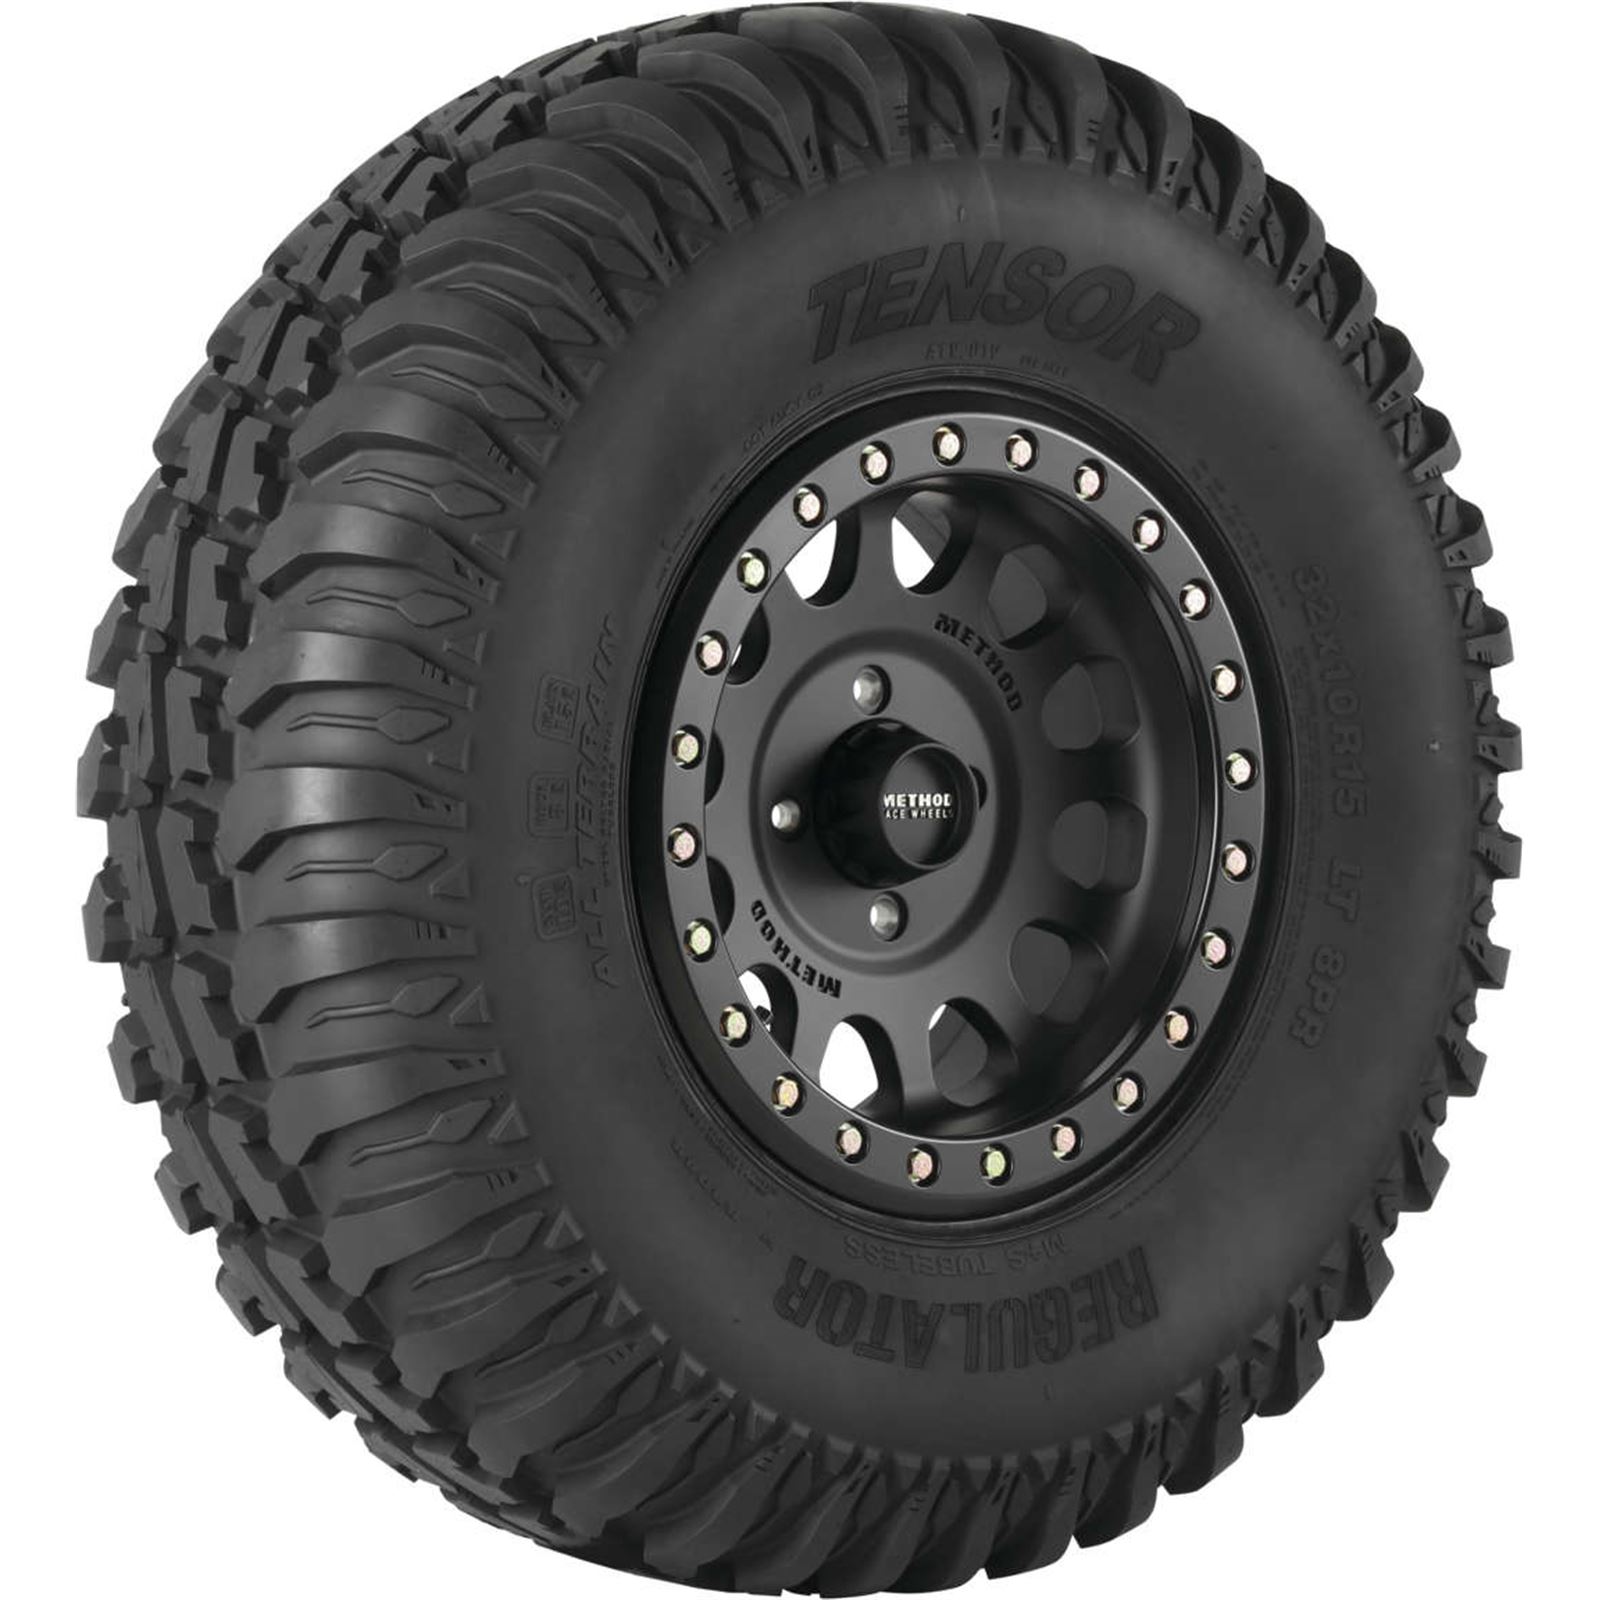 Tensor Tire Regulator All-Terrain Radial Tires - 28x10R-12, Radial, Front/Rear, 8 Ply